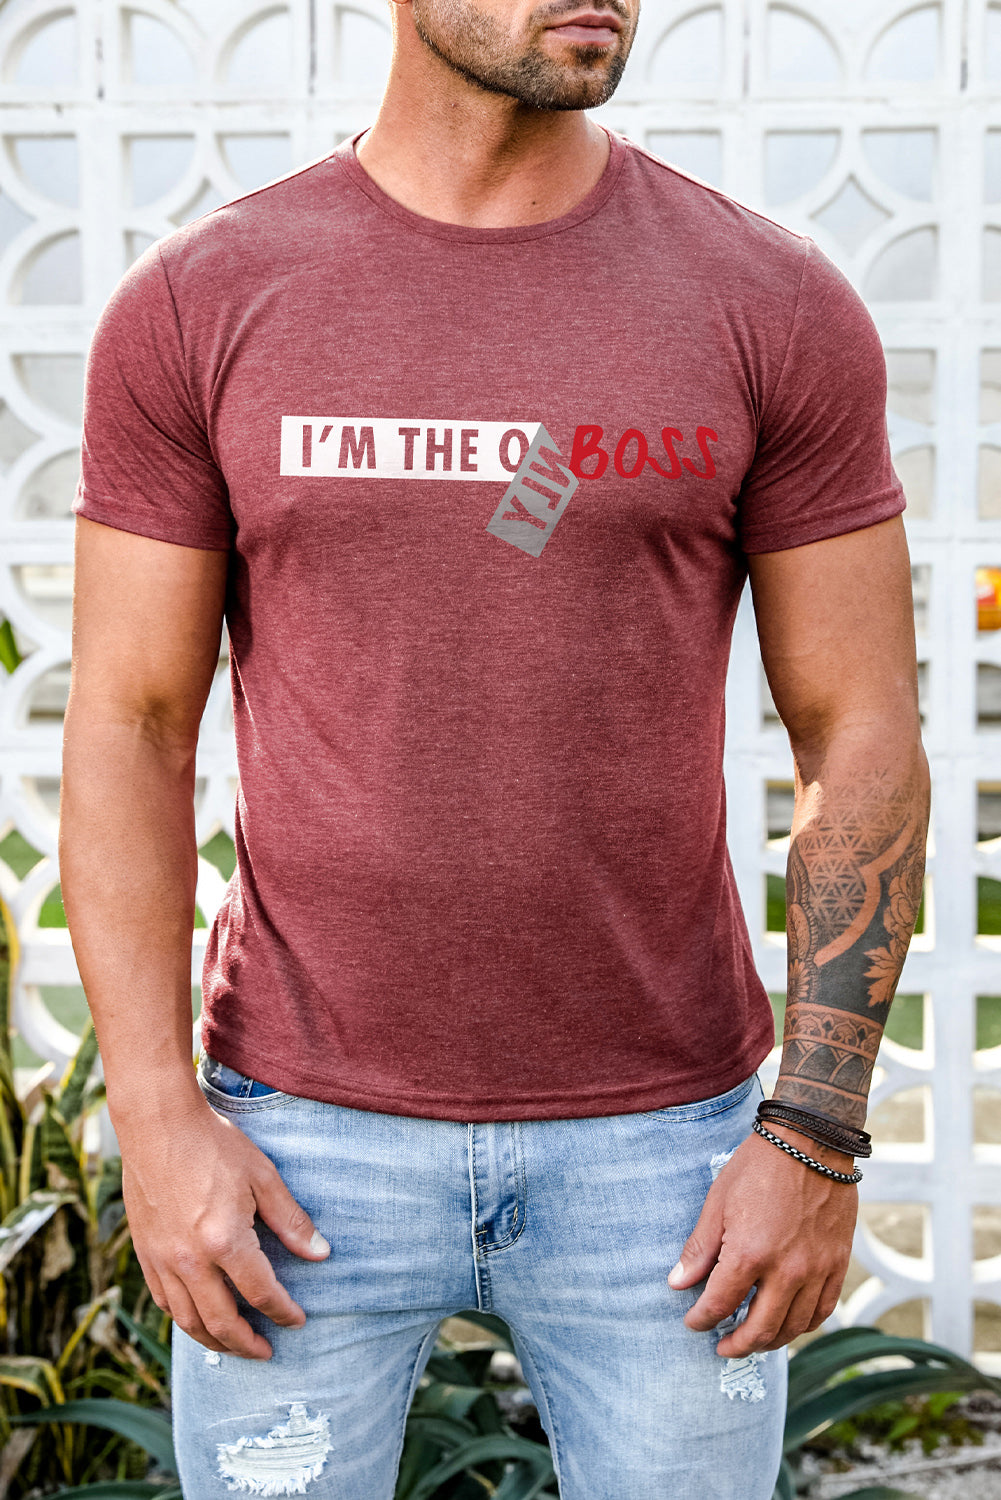 I'M THE ONLY BOSS Print Men T-shirt